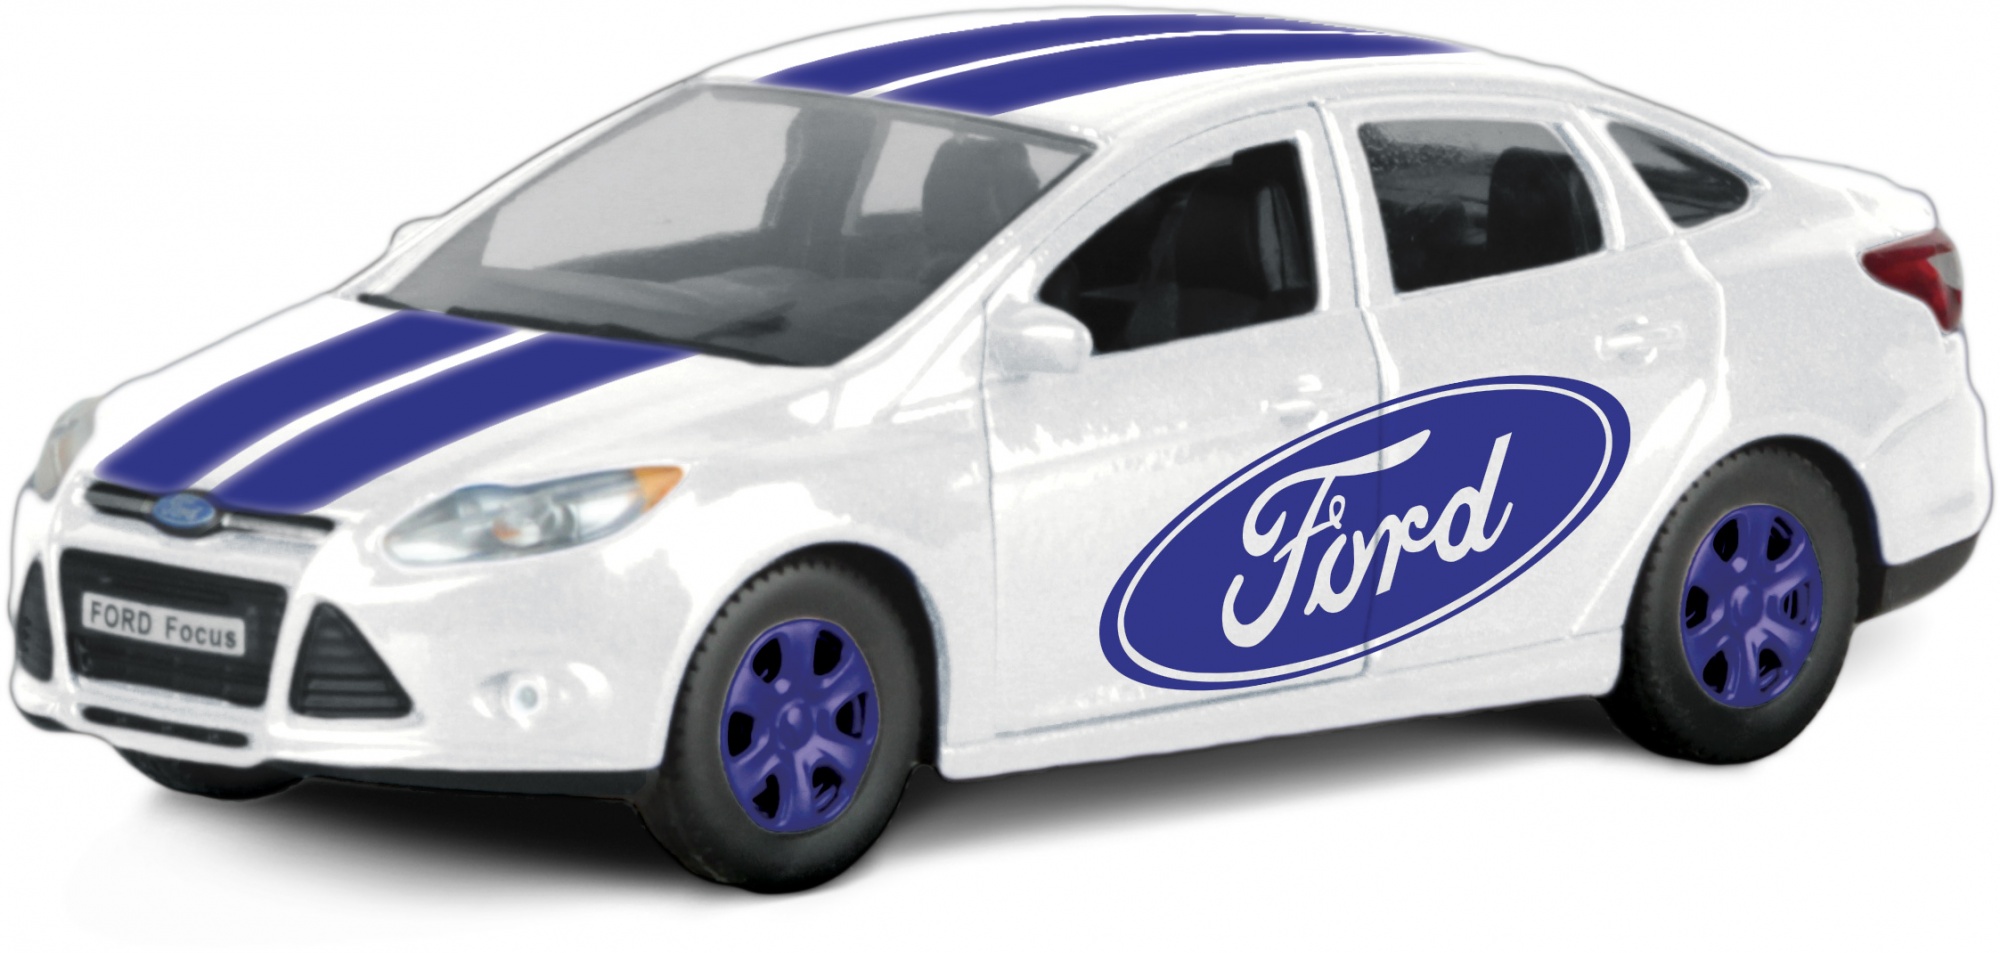 E 1 36. Игрушка машина Форд фокус АВТОТАЙМ. Игрушка Форд фокус 3 Autotime. Autogrand Ford Focus. Ford Focus 3 моделька.